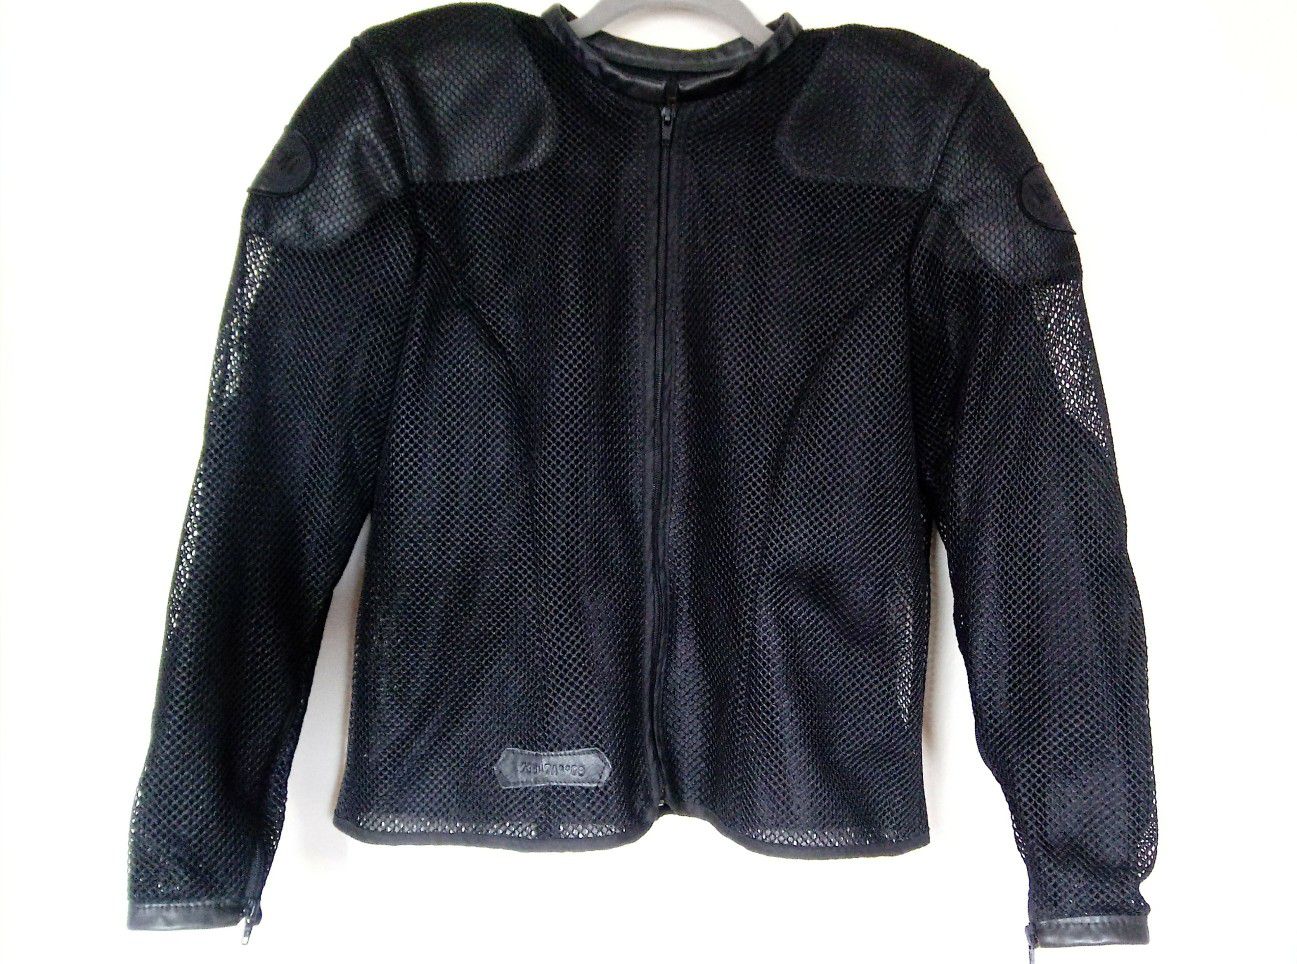 Women's leather jacket (motorcycle)